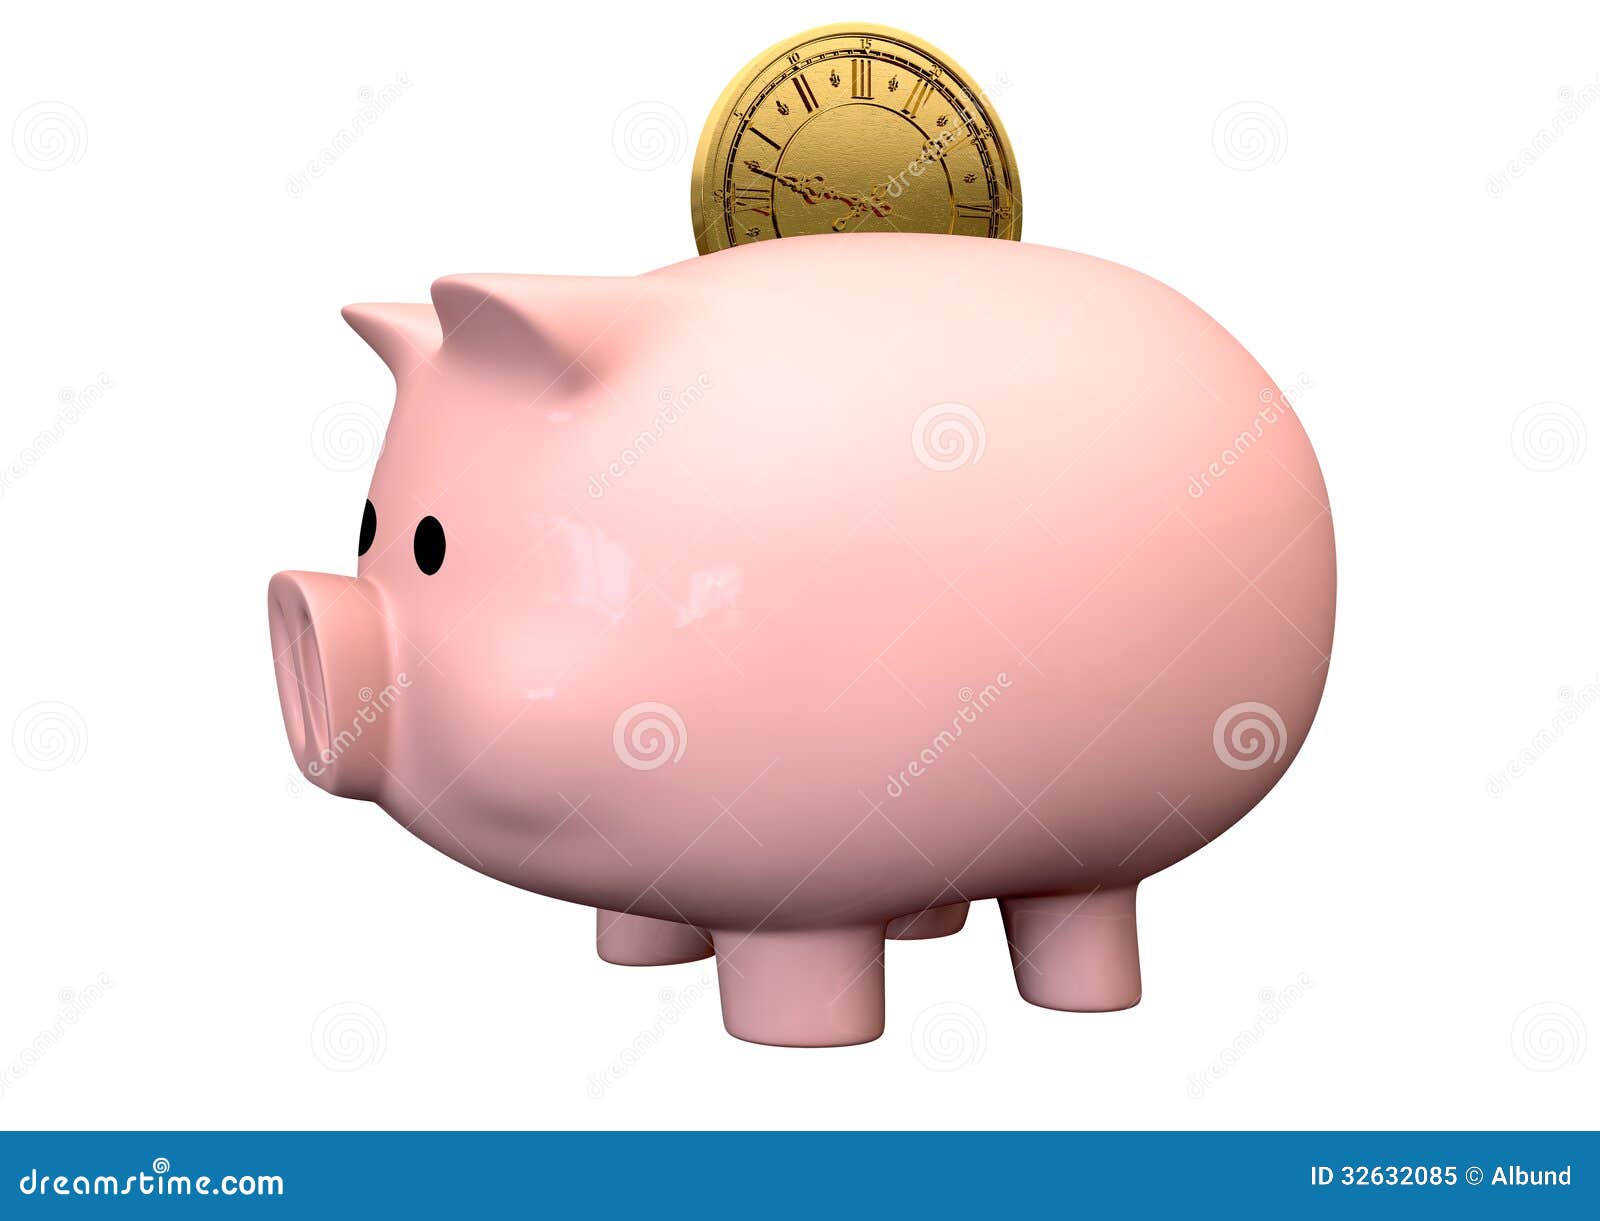 Gold Ceramic Pig Piggy Bank, Piggy Bank Gold Money Box